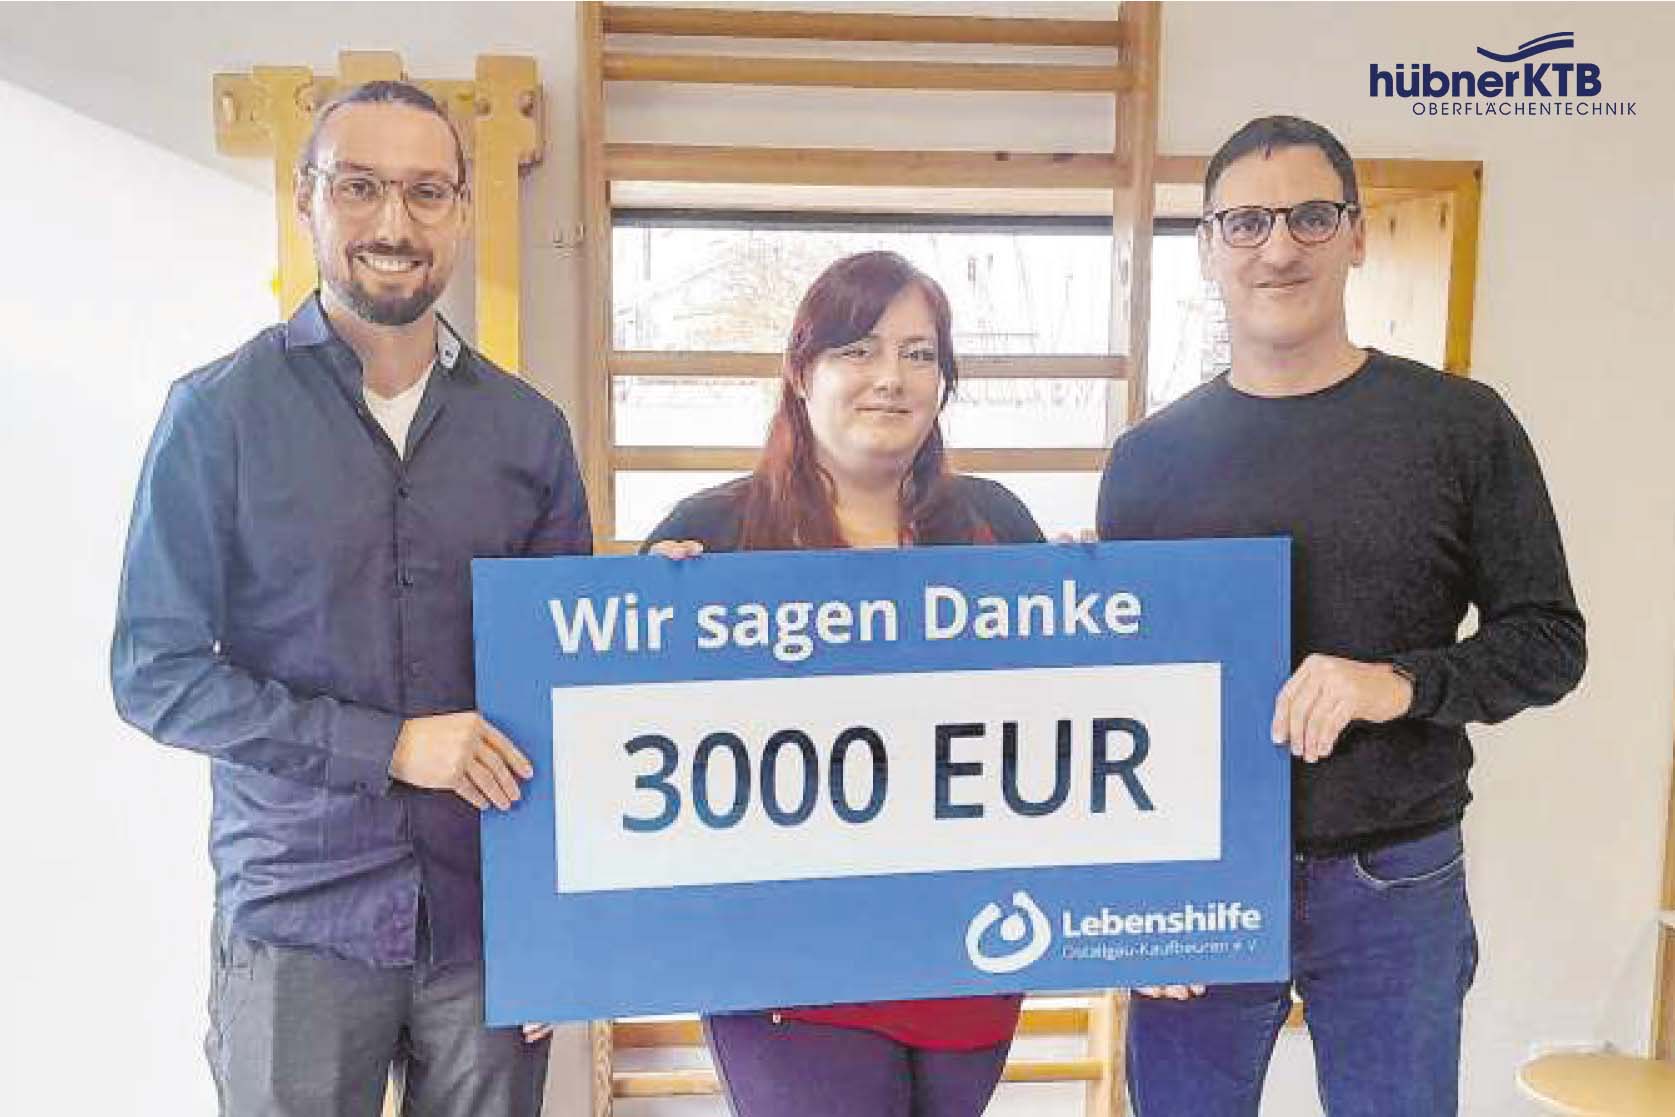 Hübner-KTB Oberflächentechnik donates 3000 euros